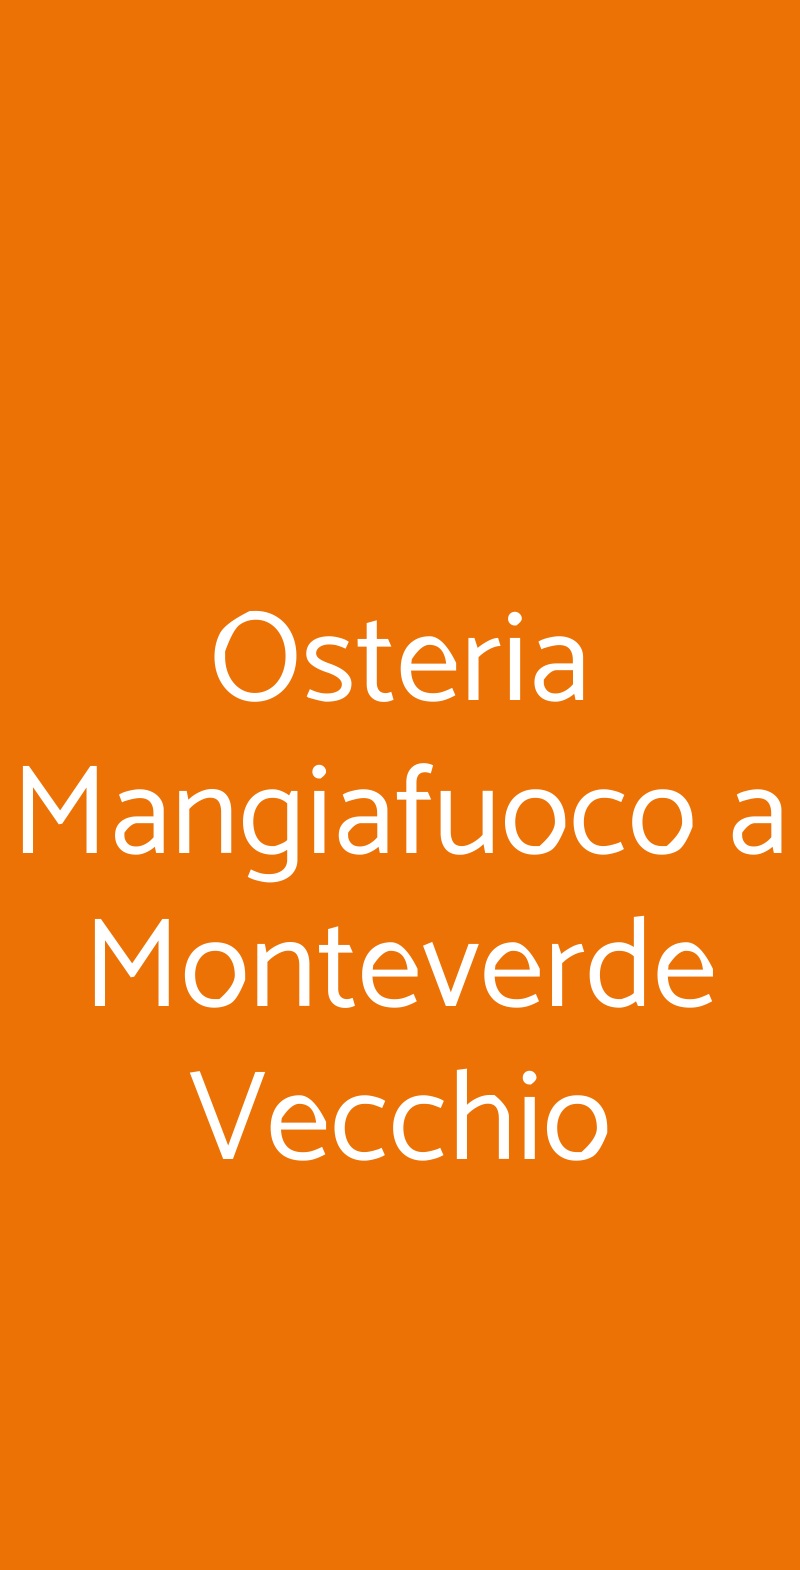 Osteria Mangiafuoco a Monteverde Vecchio Roma menù 1 pagina